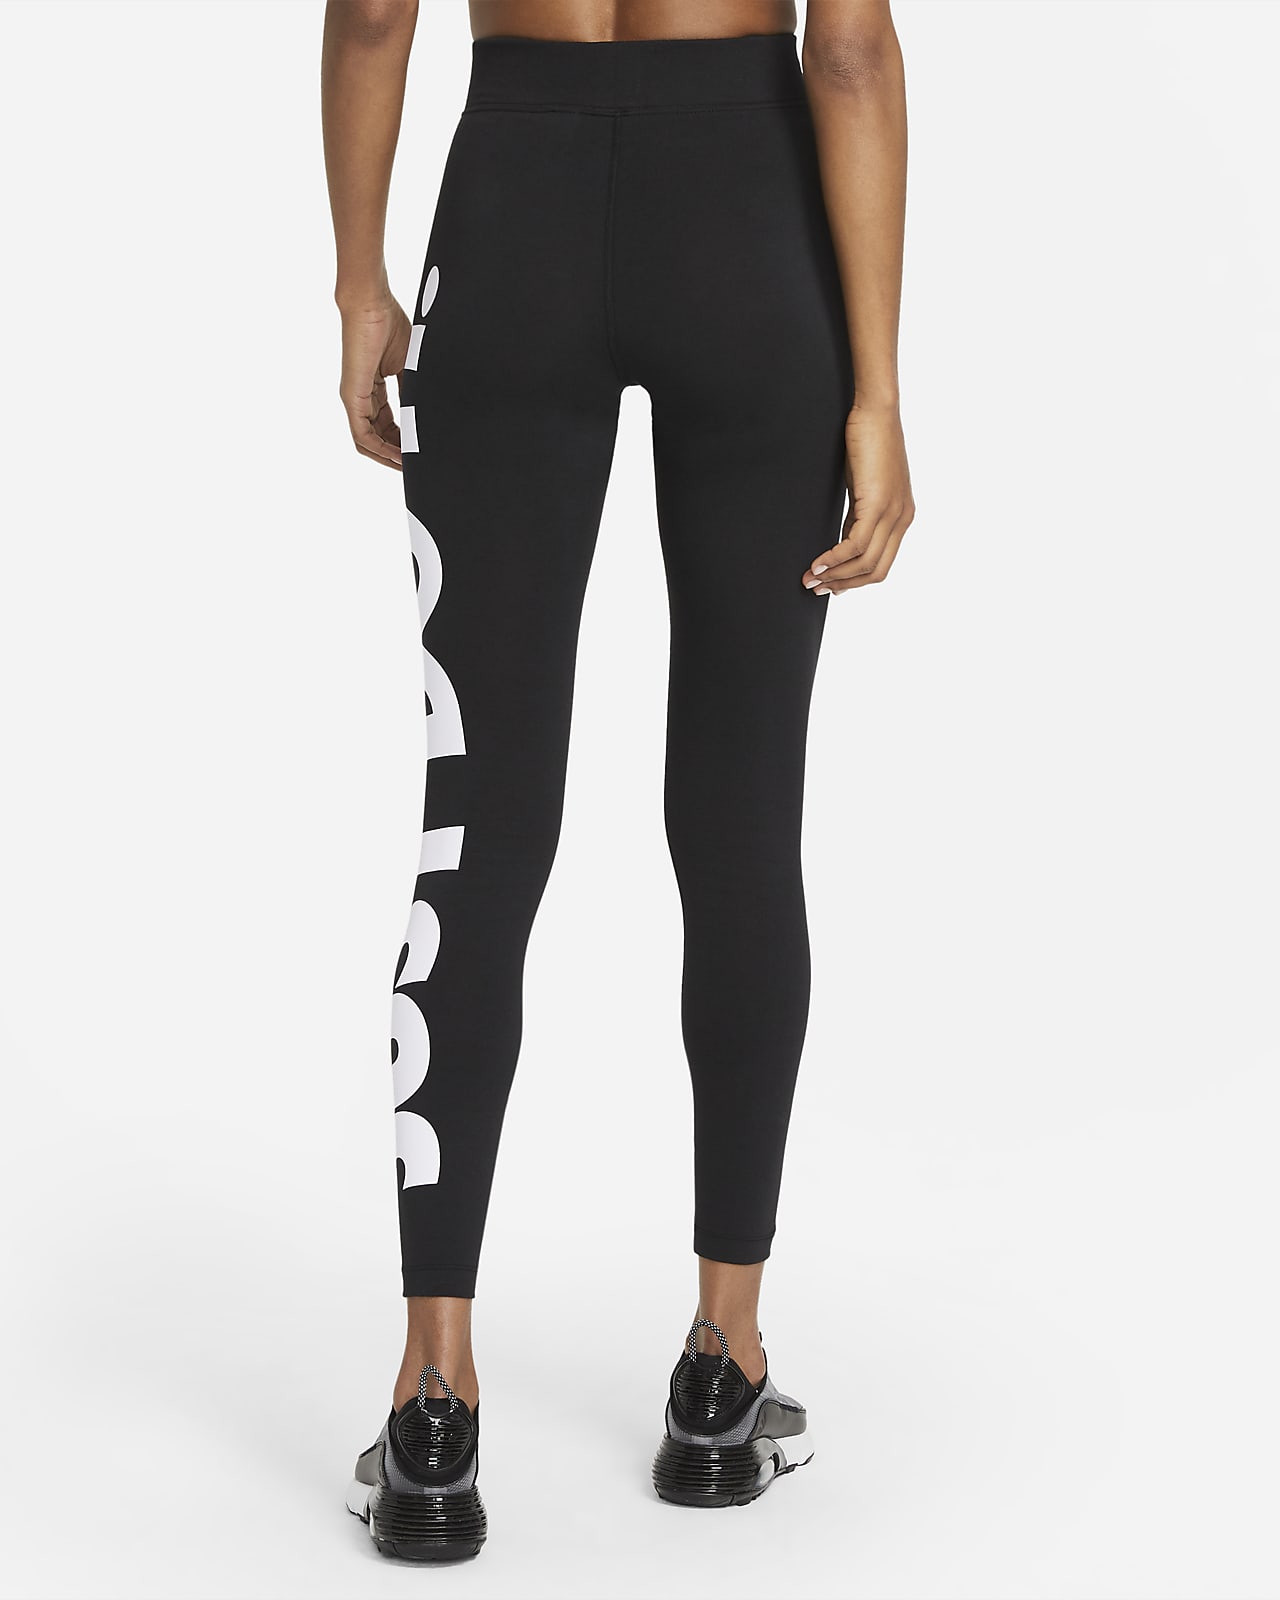 Nike Leggings Women, Black / L